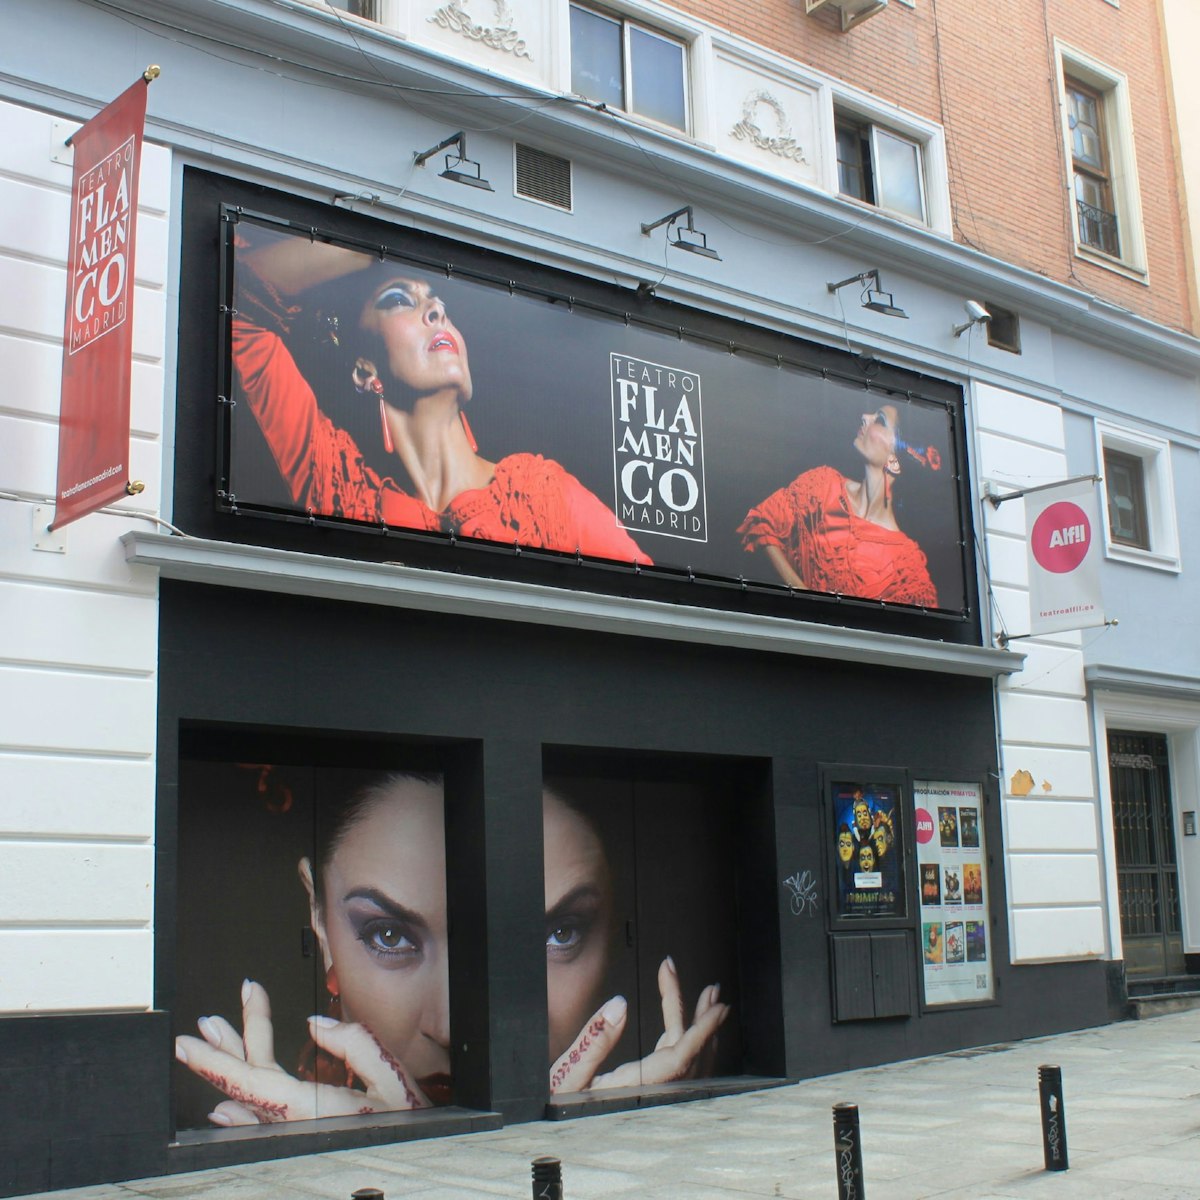 The dramatic entrance at Teatro Flamenco Madrid.